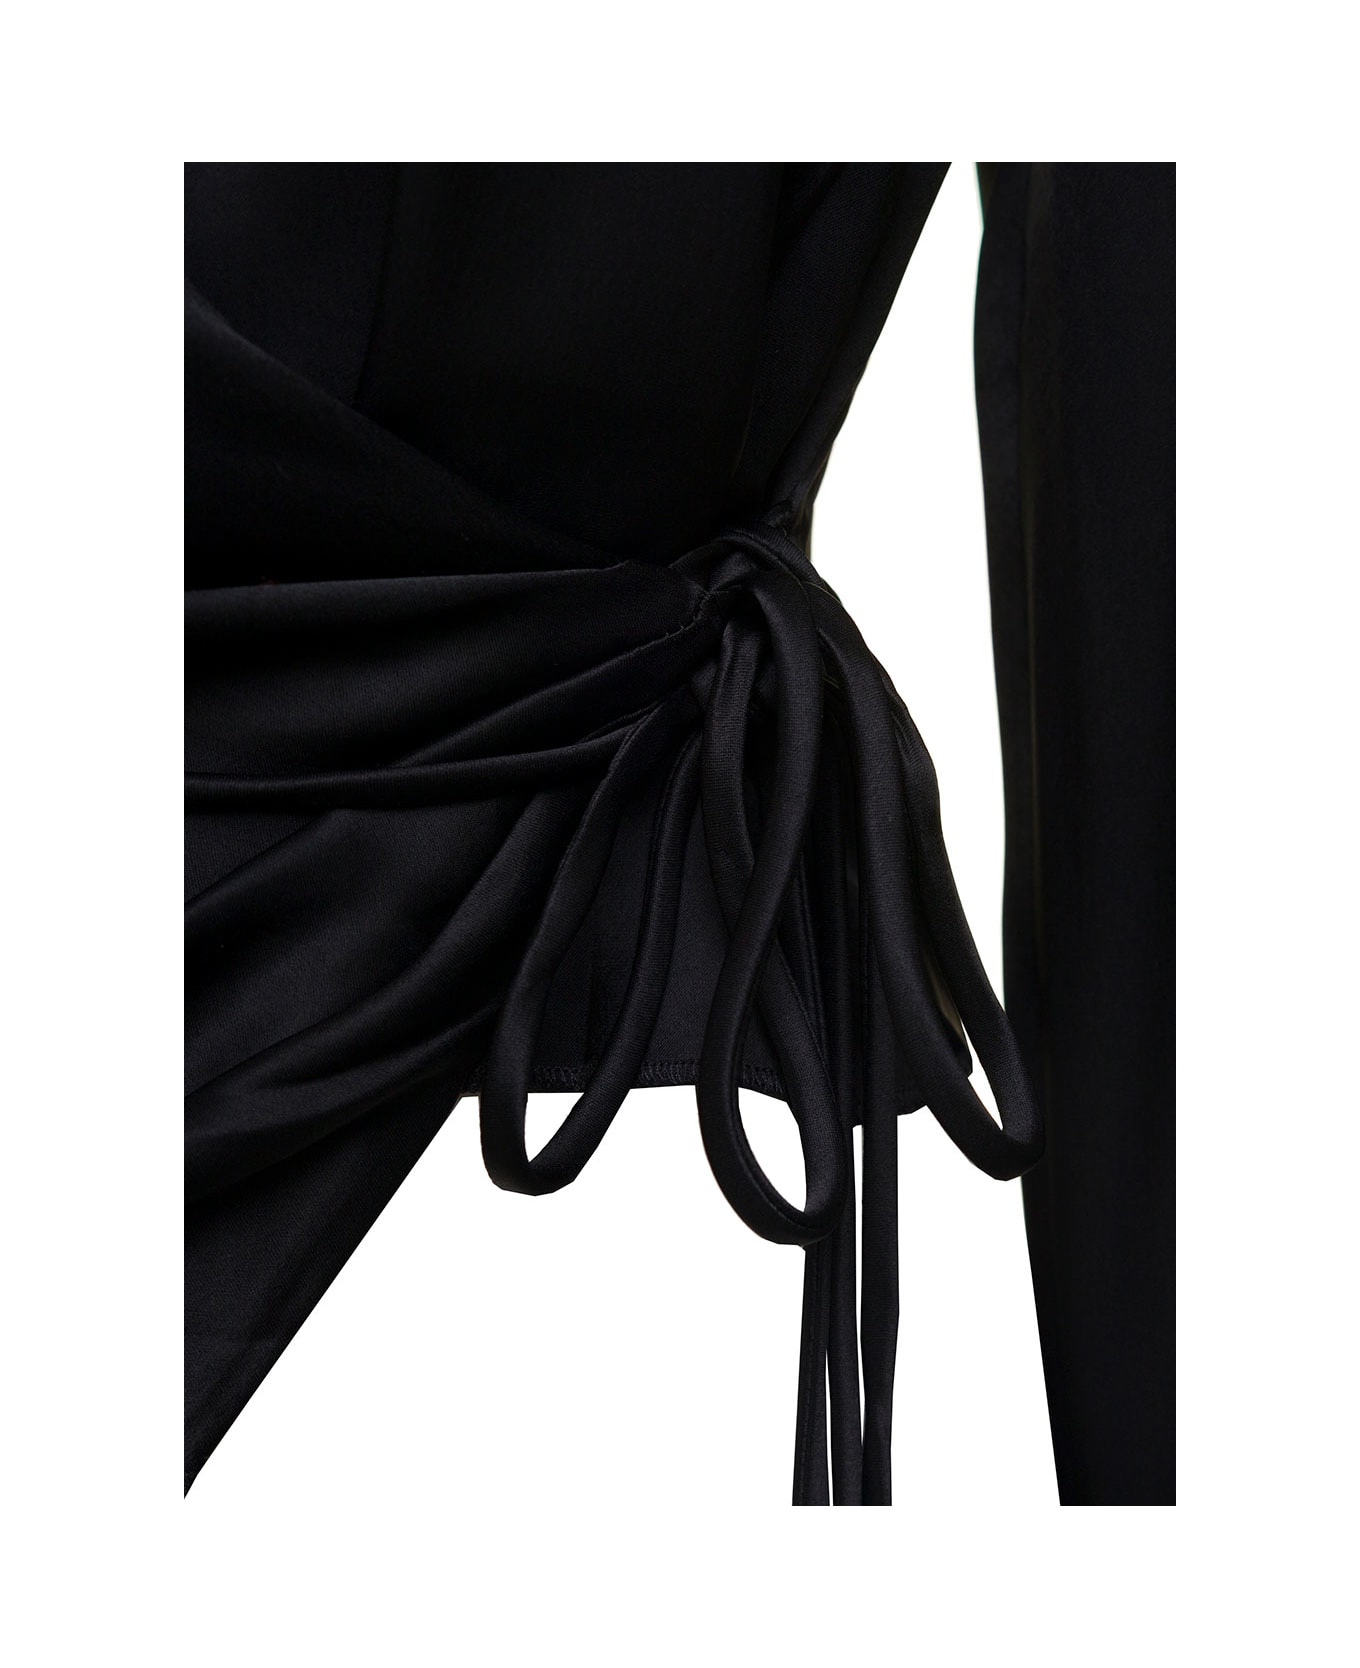 Nanushka Black Shirt With Cuban Collar In Satin Fabric Woman - Black